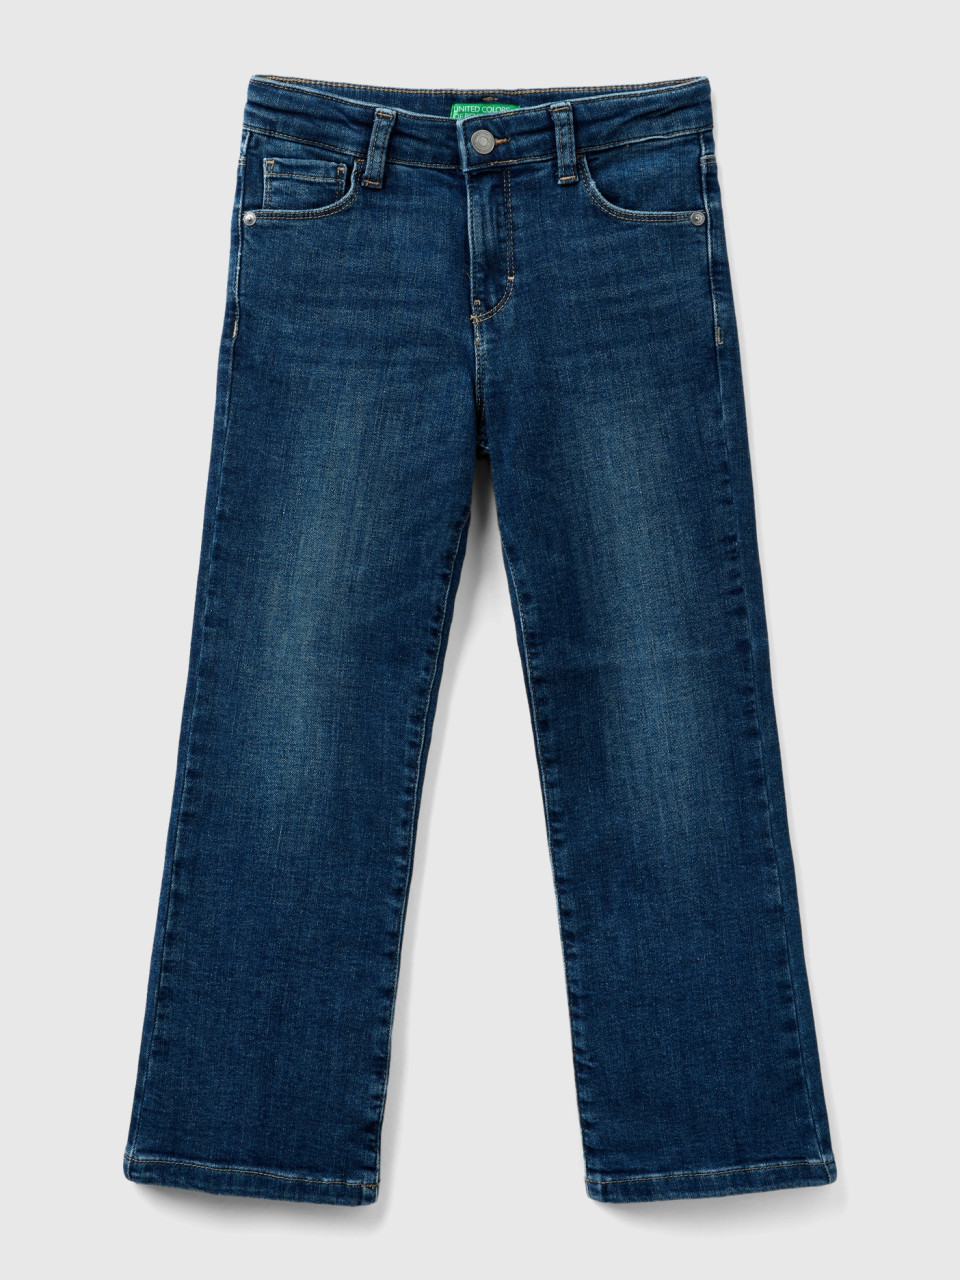 Benetton, Five Pocket Flared Jeans, Dark Blue, Kids